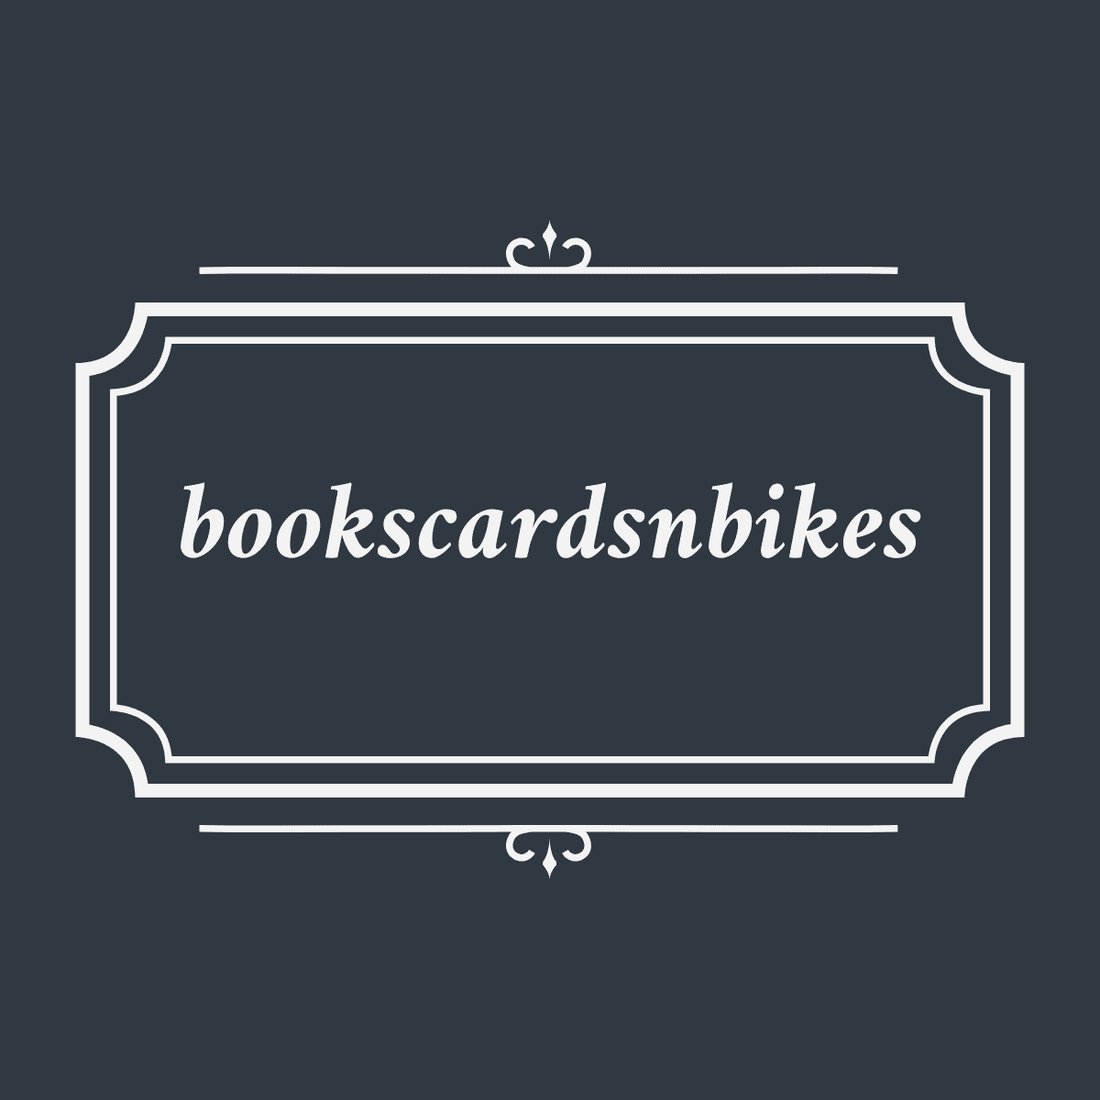 Antiquarian Rare Books for Sale | Books Cards N Bikes